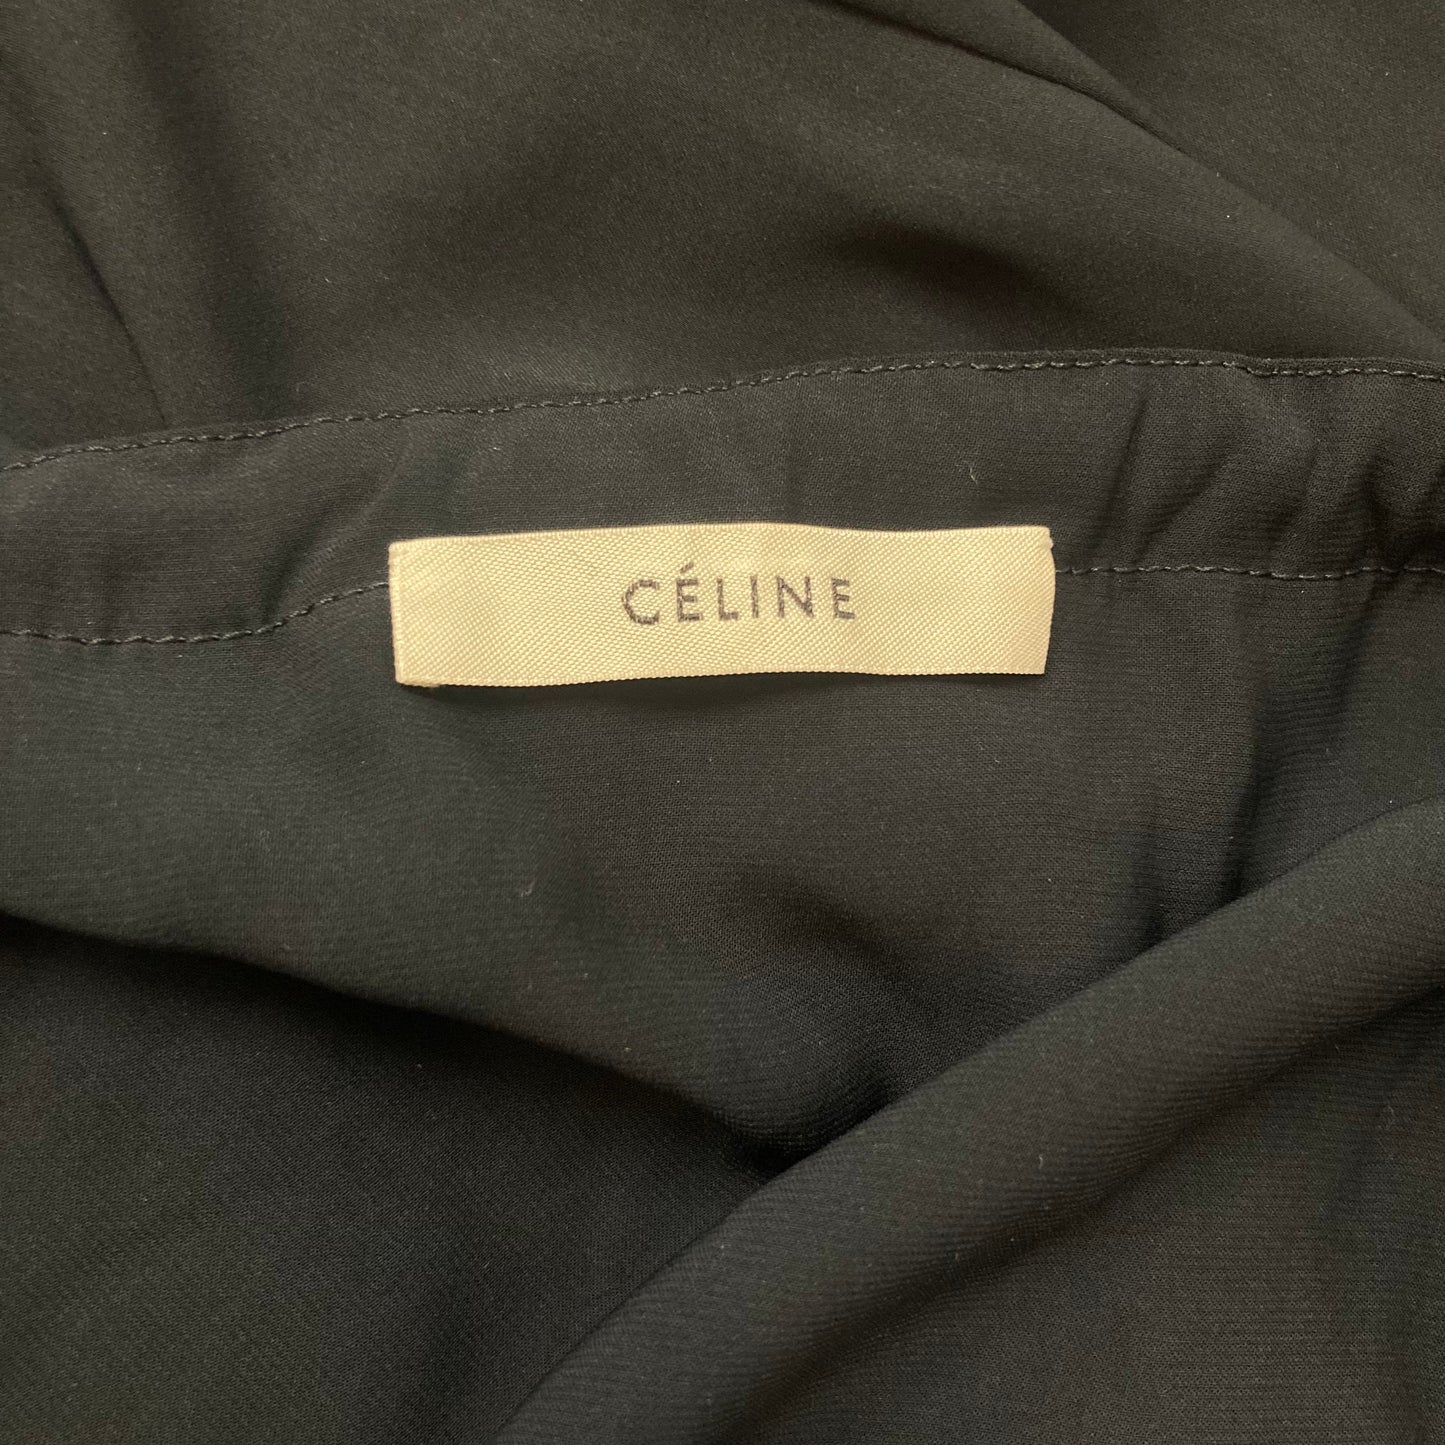 Fall2017 Celine by Phoebe Philo dress